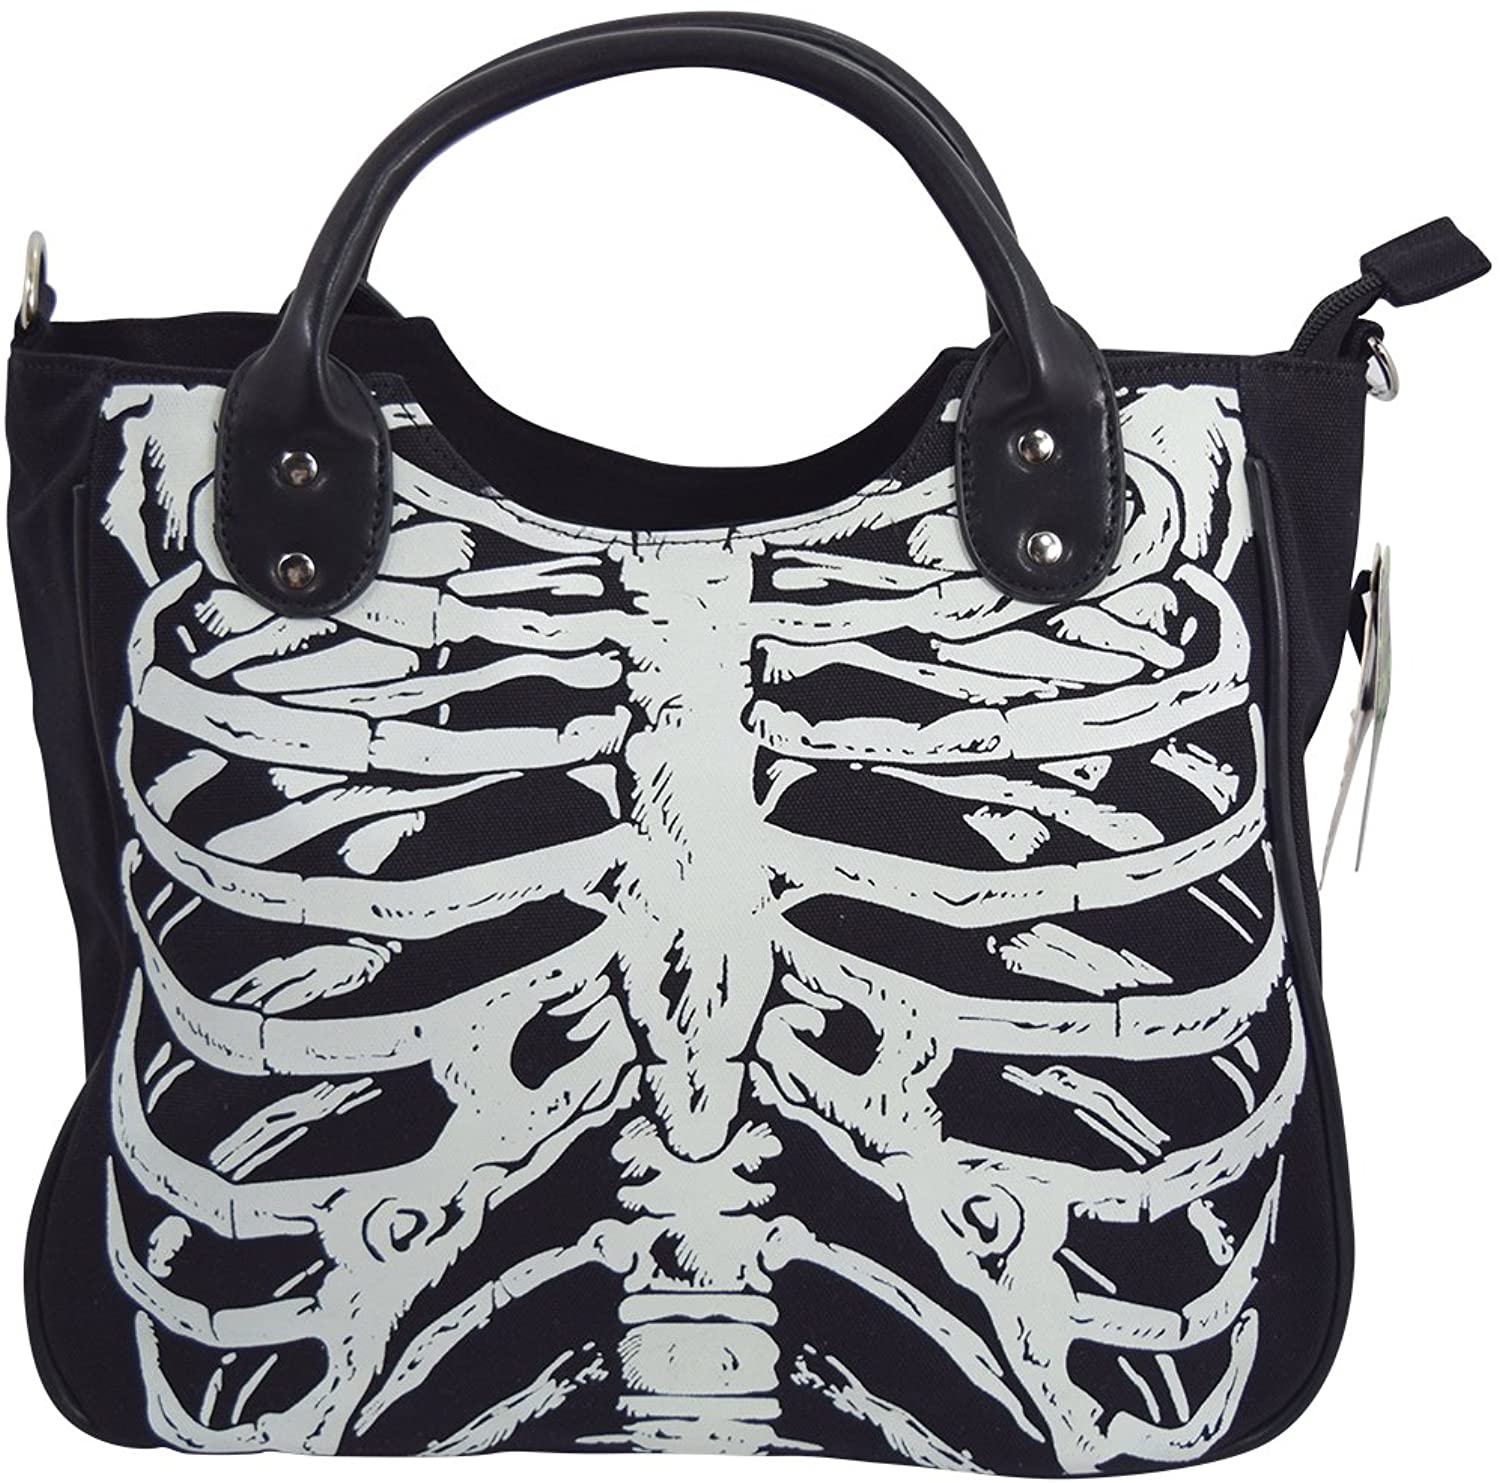 🌟 Lost Queen Glow In The Dark Skeleton Ribcage Shoulder Bag - Embrace Gothic Elegance! 🦴